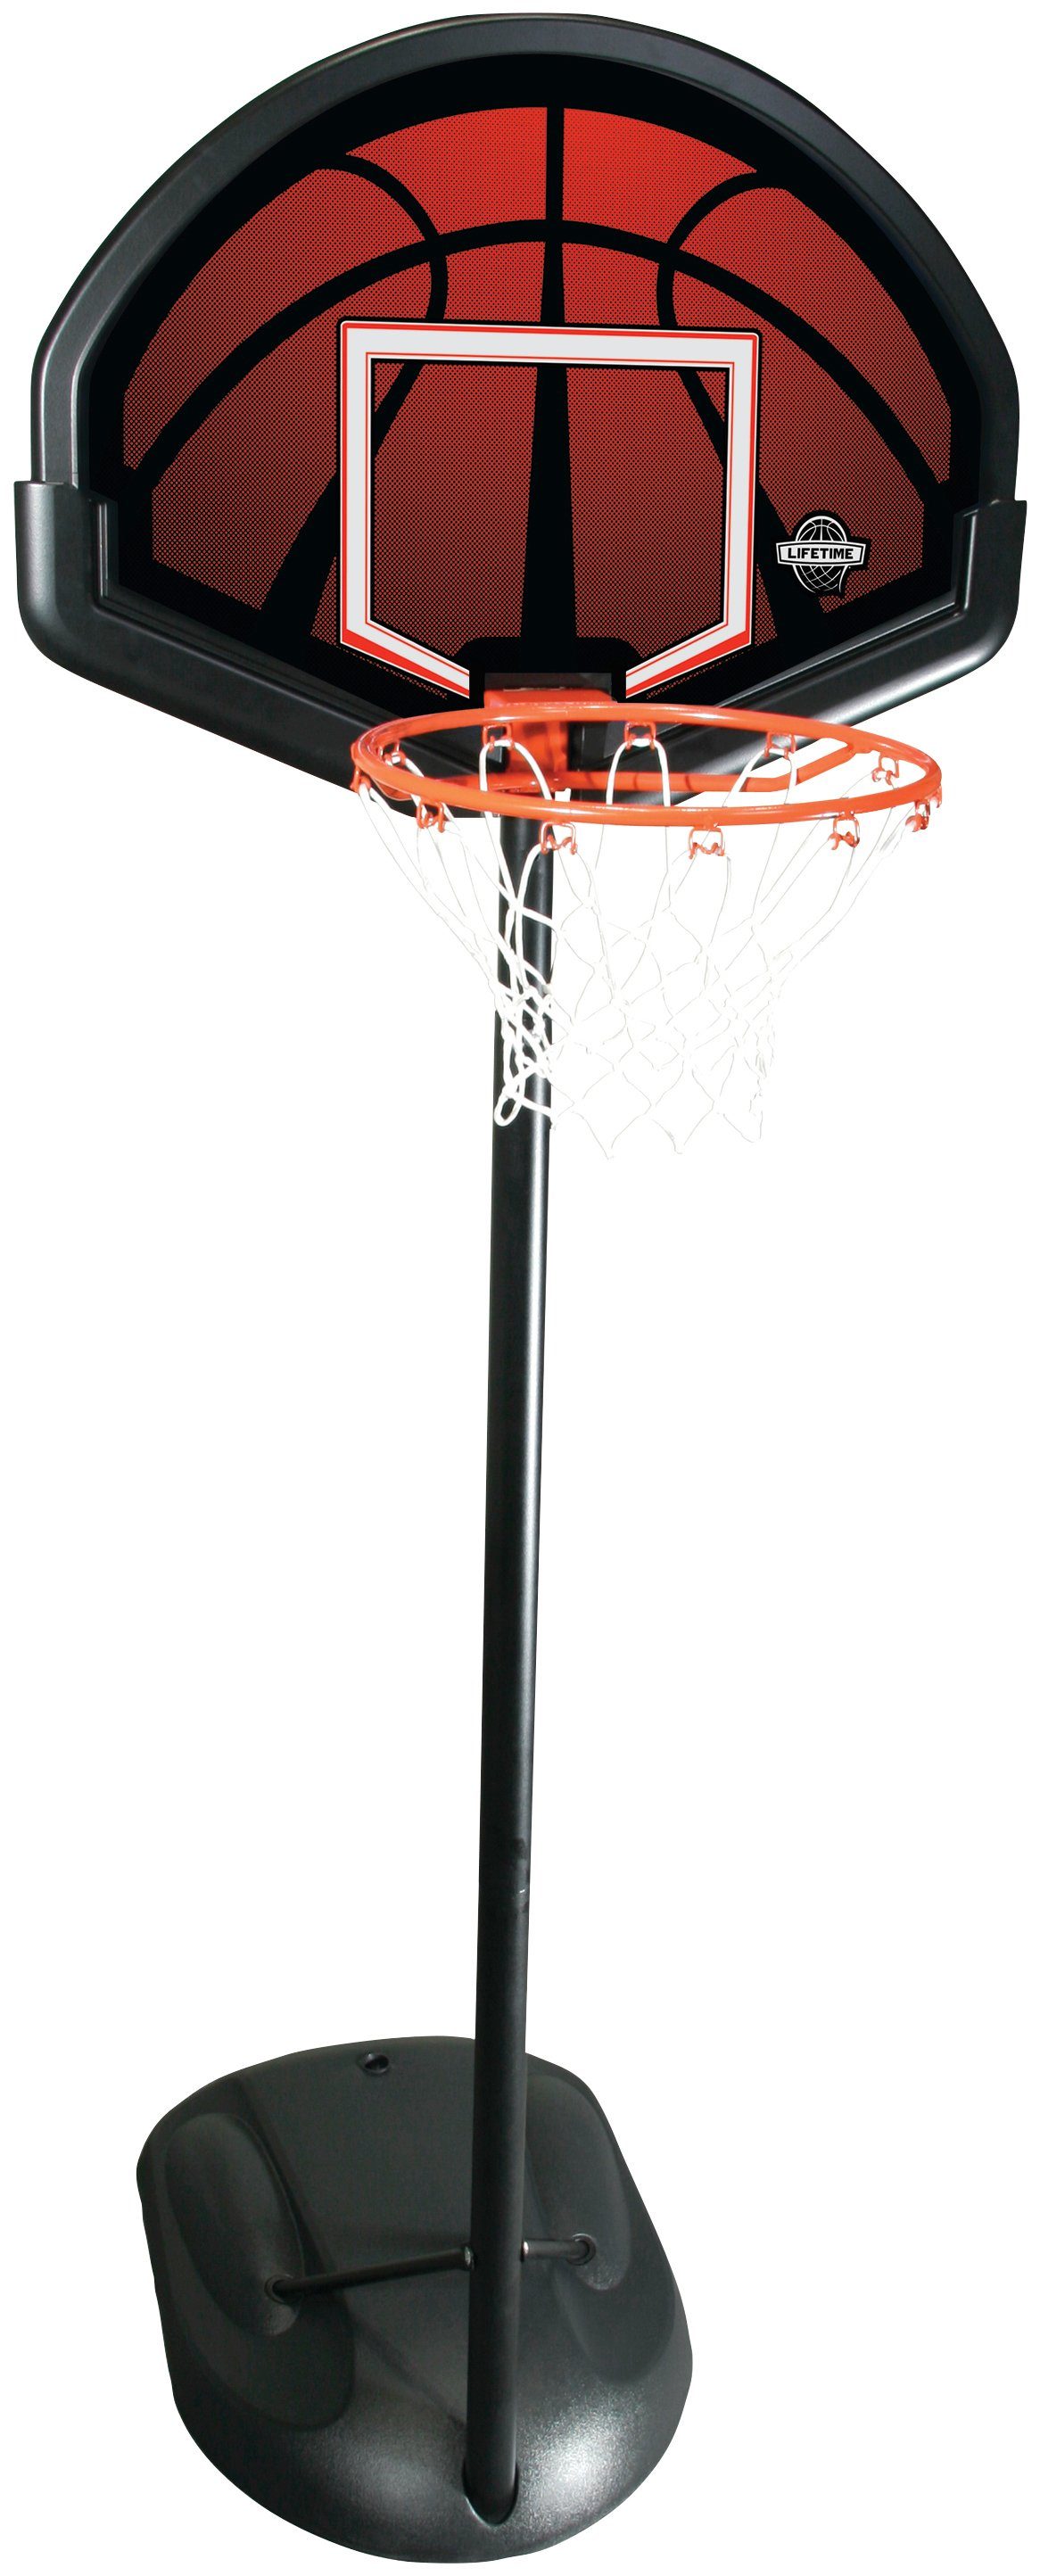 50NRTH Basketballkorb Alabama, schwarz/rot höhenverstellbar